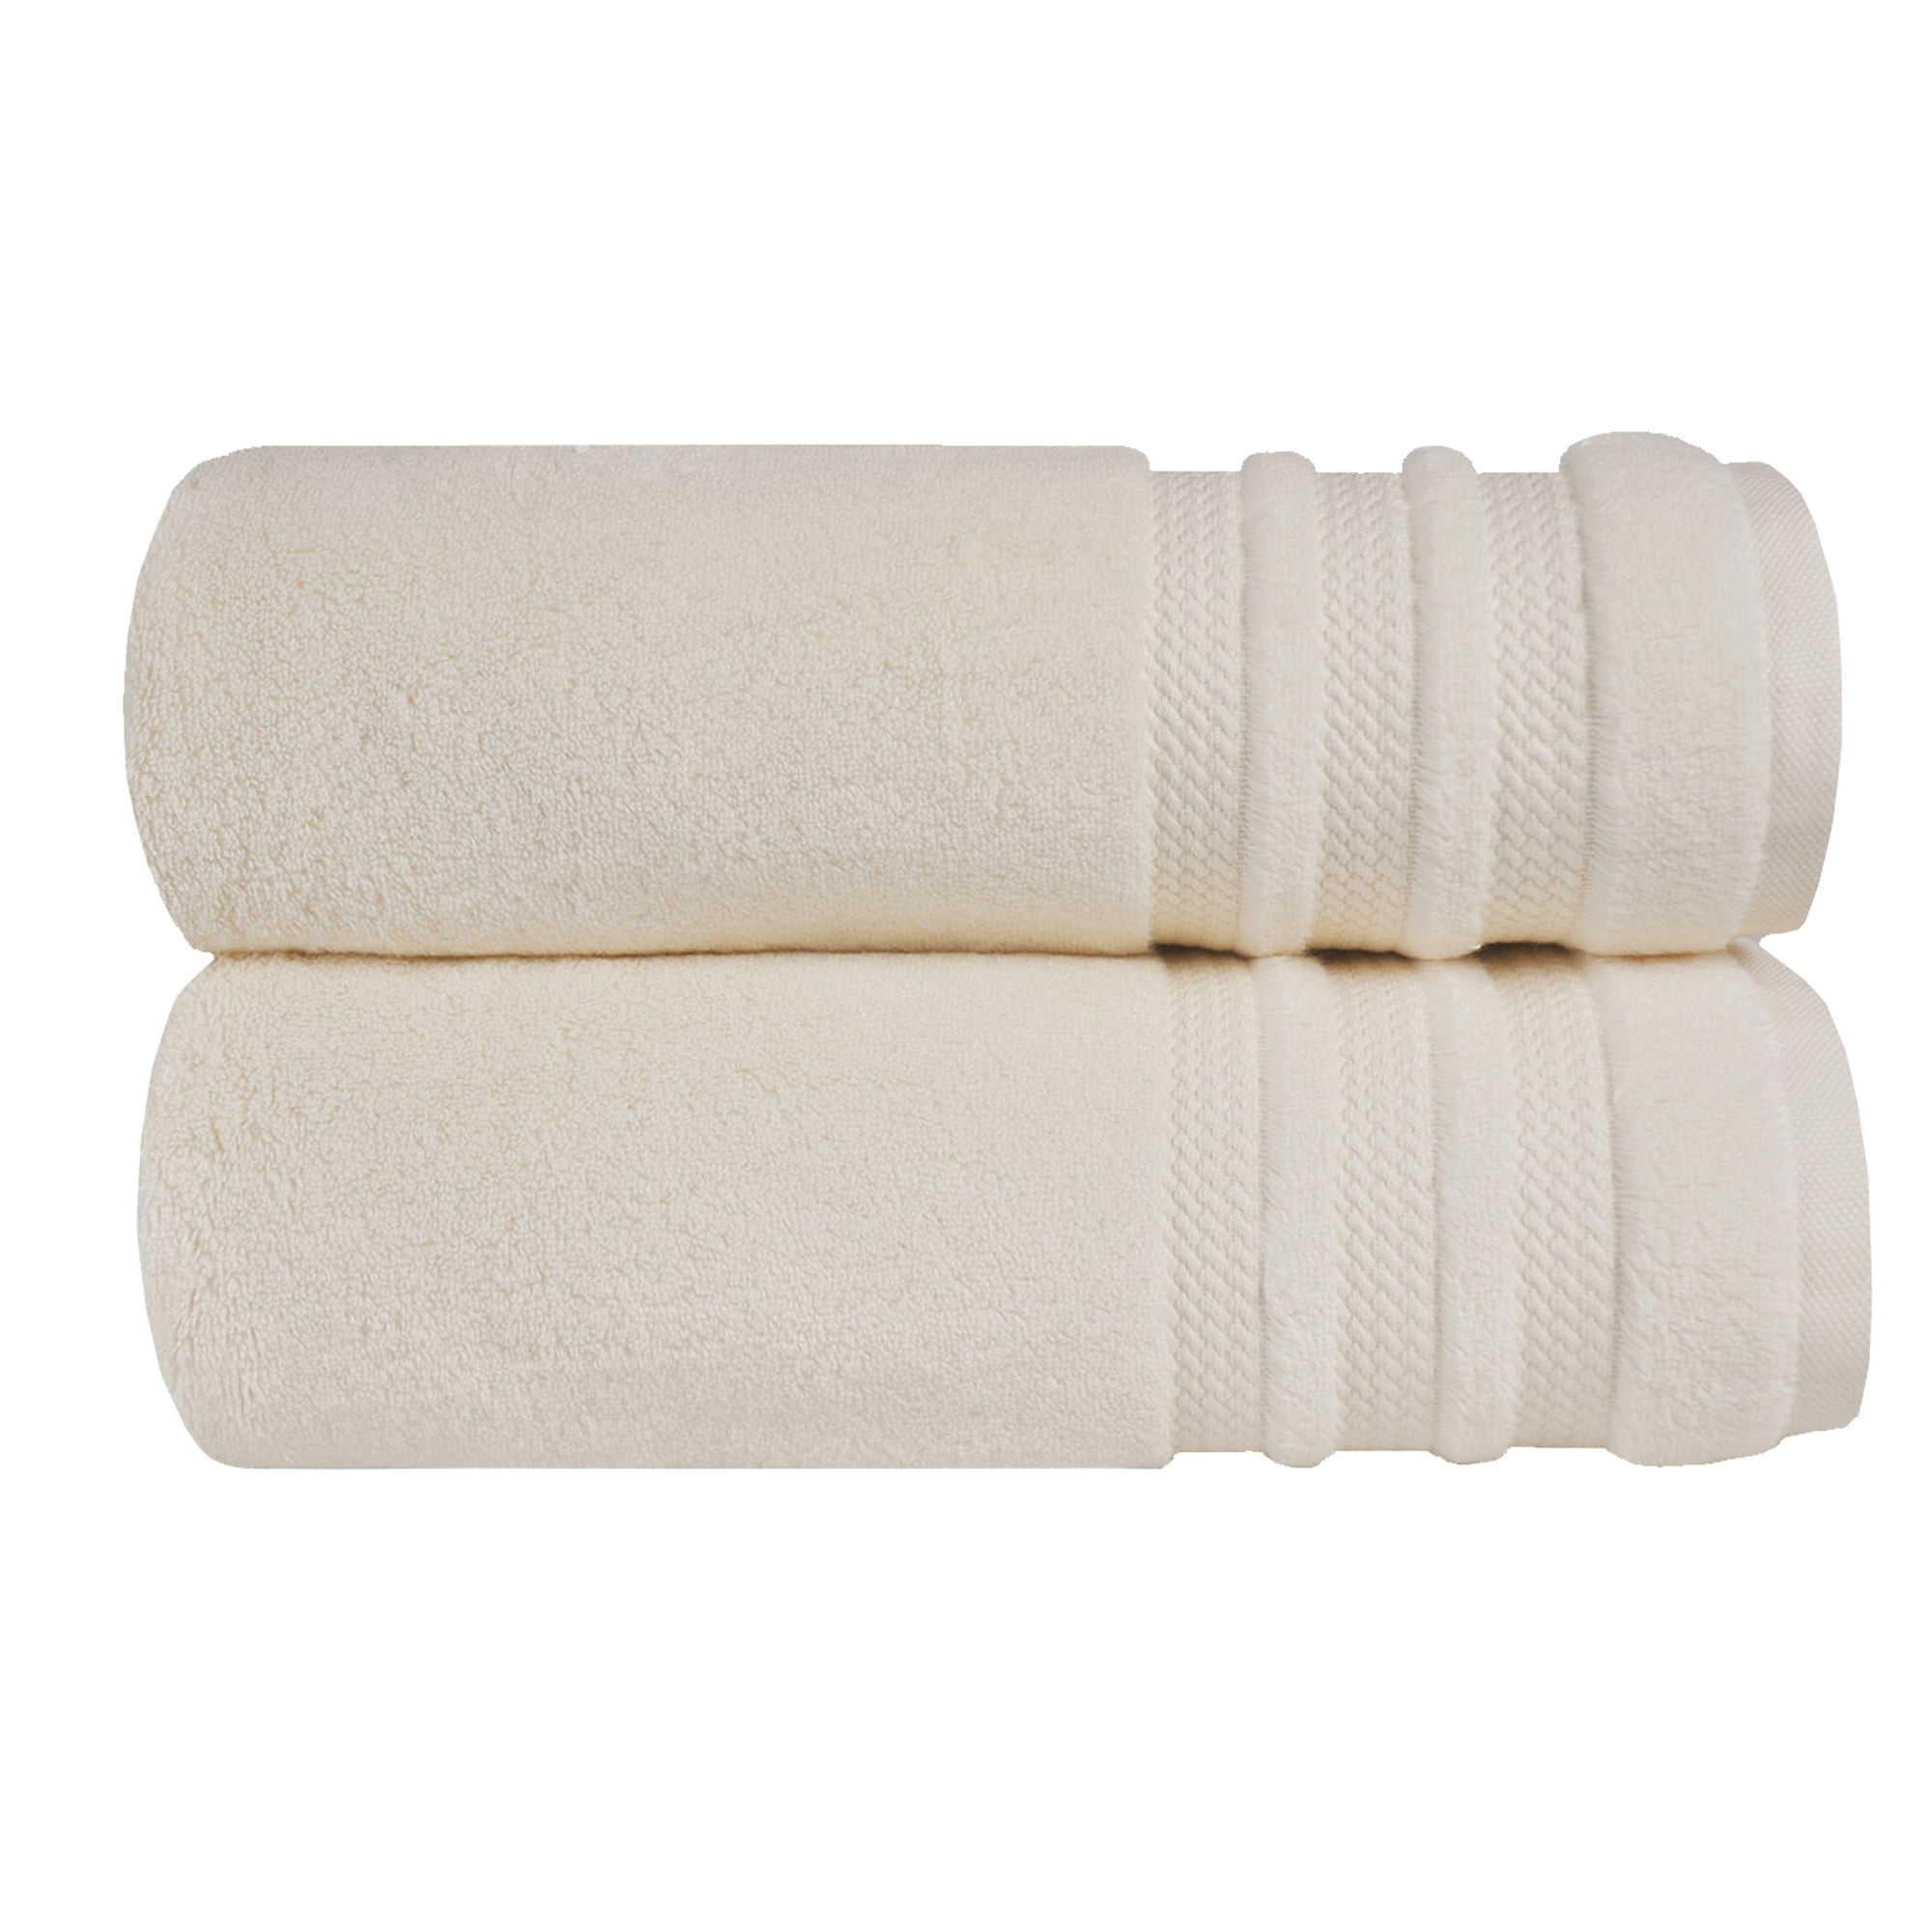 6-Piece Bath Towel Set - 100% Cotton Towel Set 625 GSM Quick Dry Ultra  Absorbent